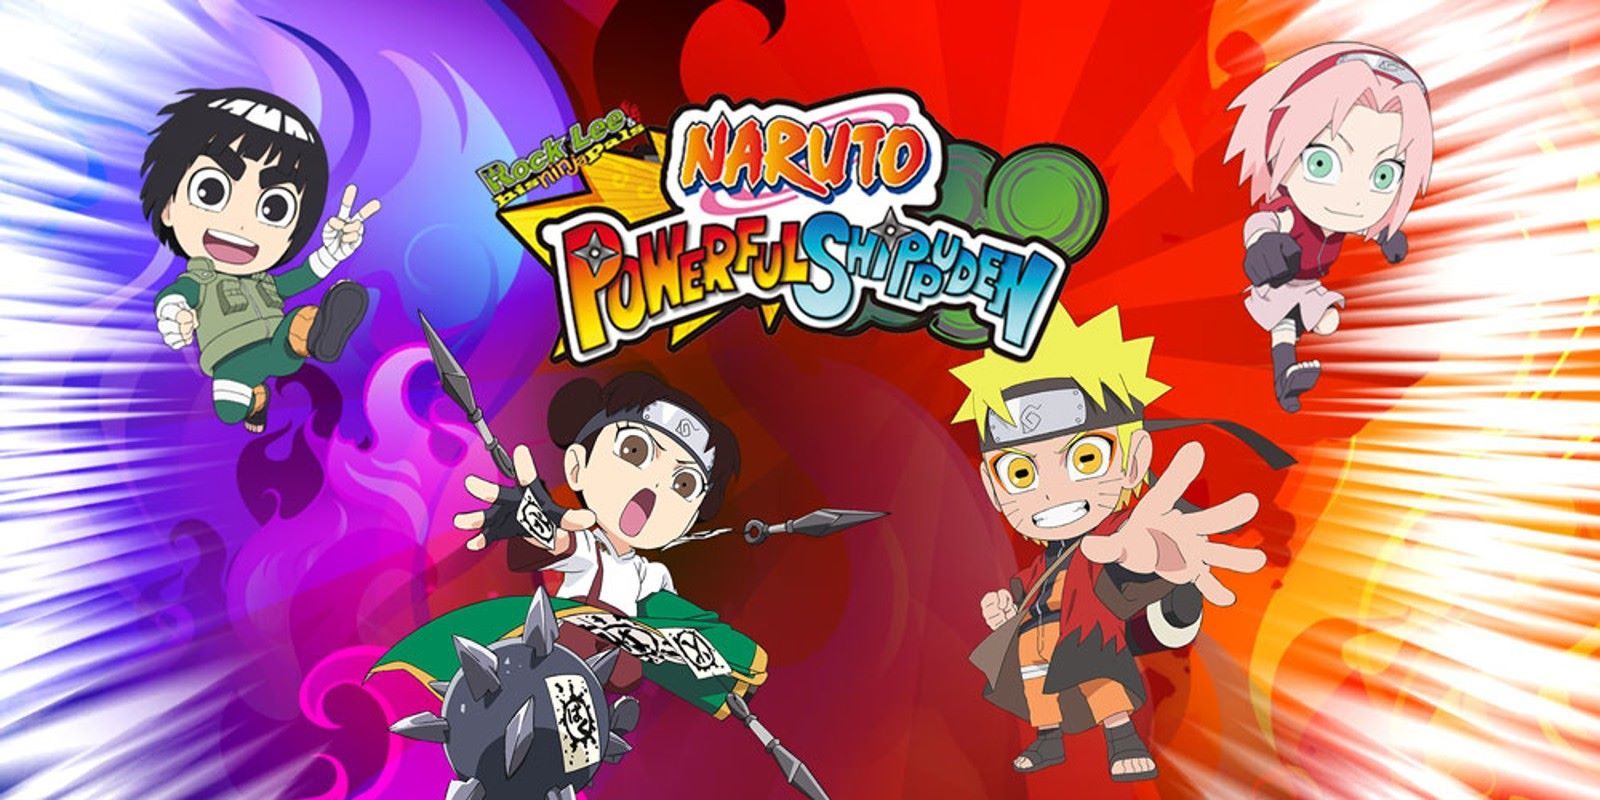 2012's Naruto Powerful Shippuden video game.